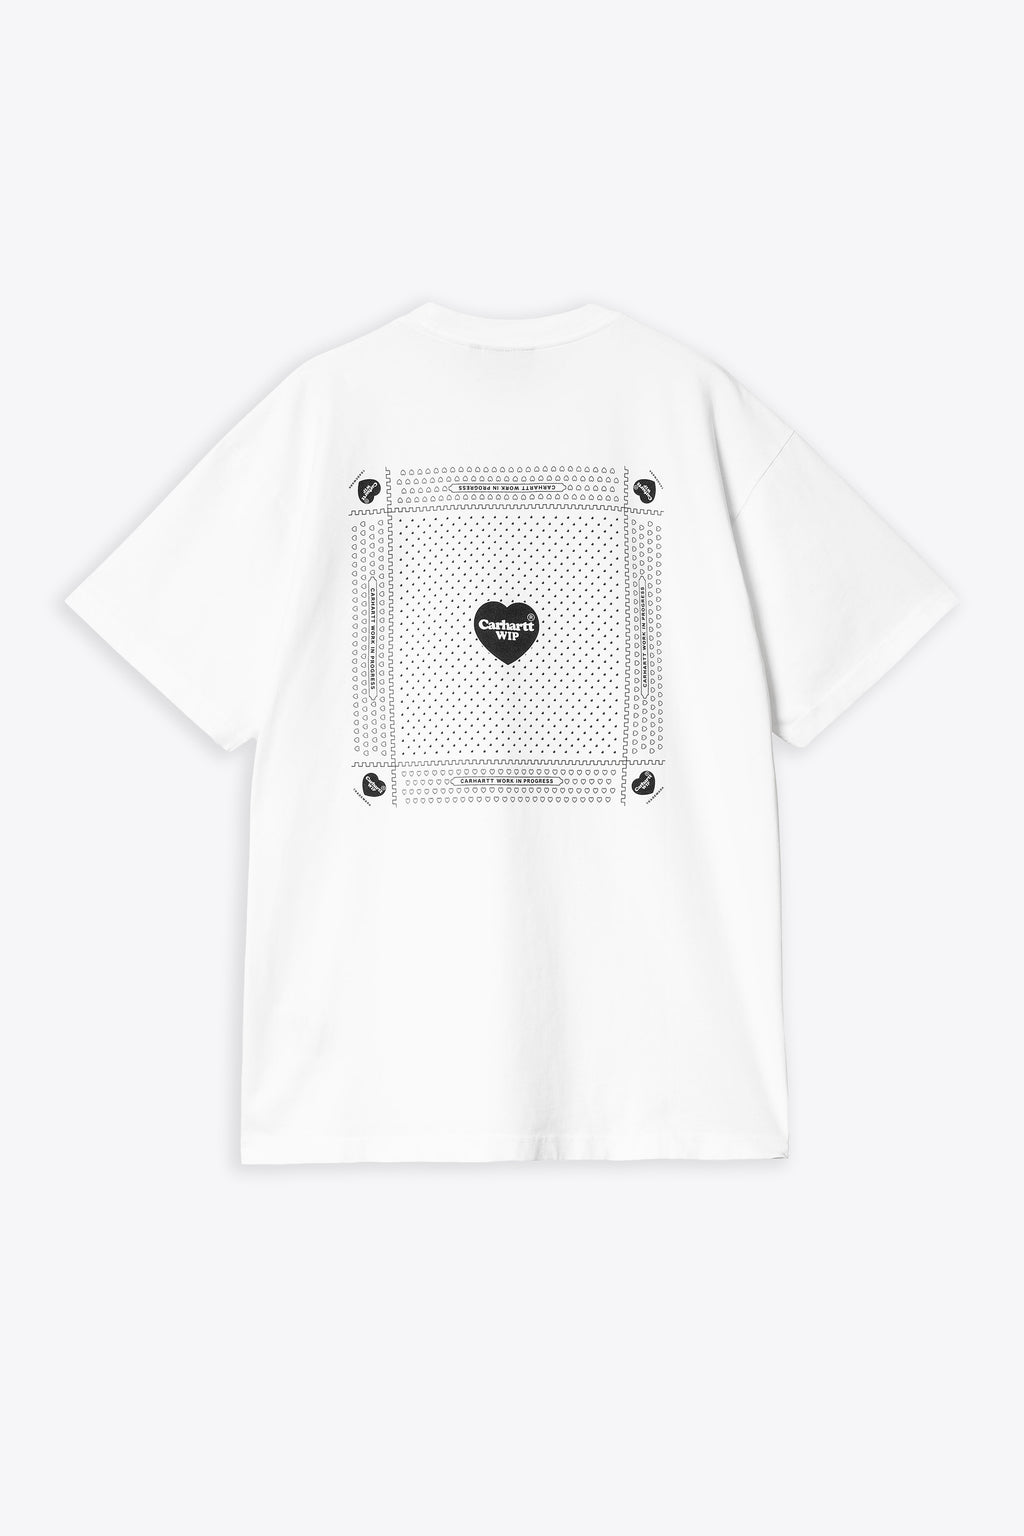 alt-image__White-cotton-t-shirt-with-heart-graphic-print---S/S-Heart-Bandana-T-Shirt